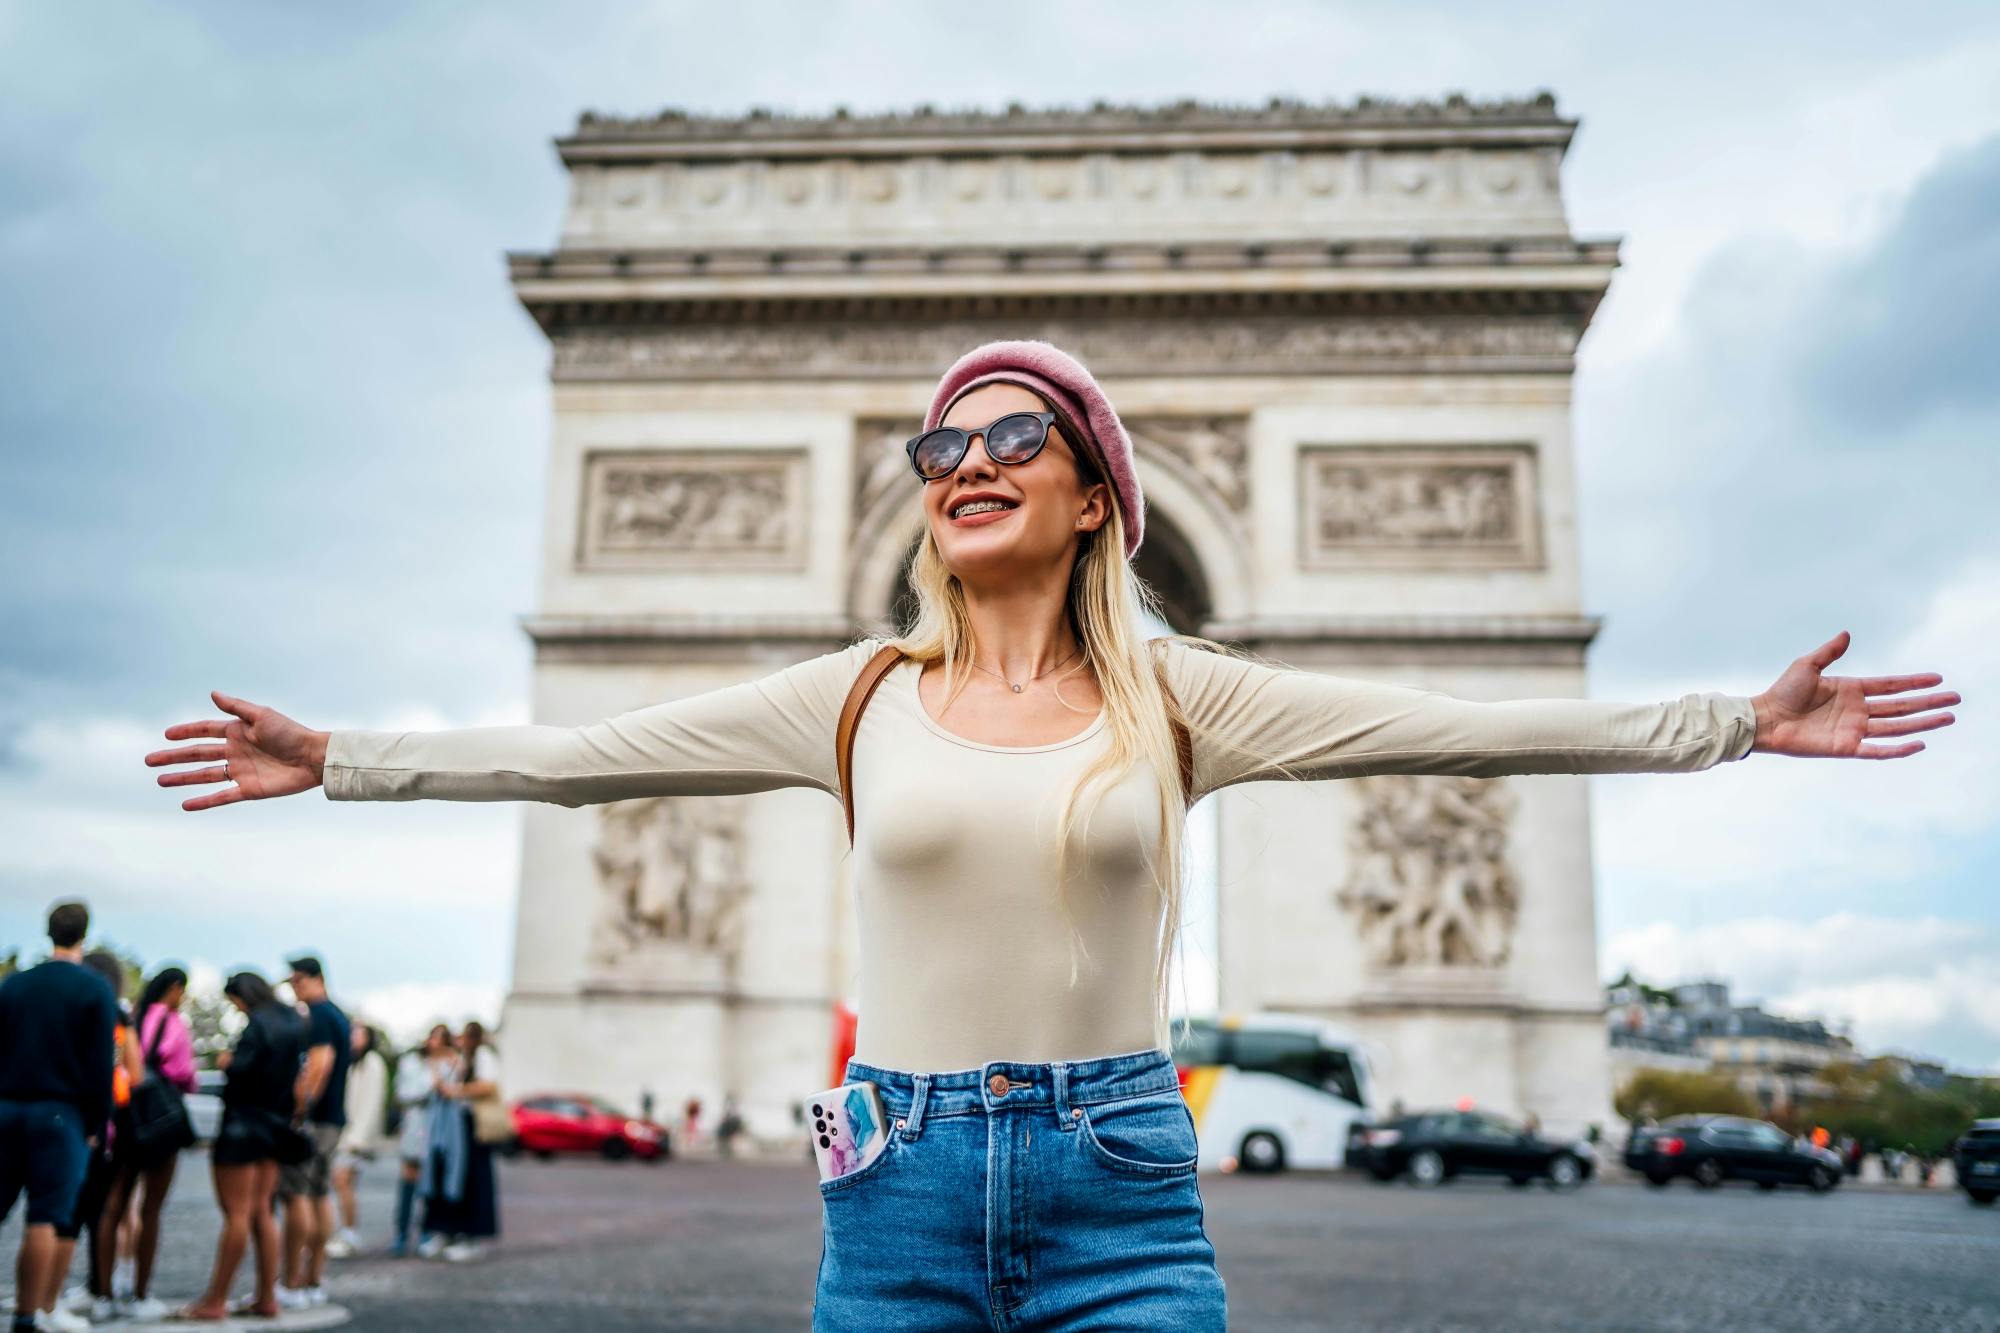 Paris Photoshoot Tour The Big 3: Eiffel Tower, Arc De Triomph and Seine